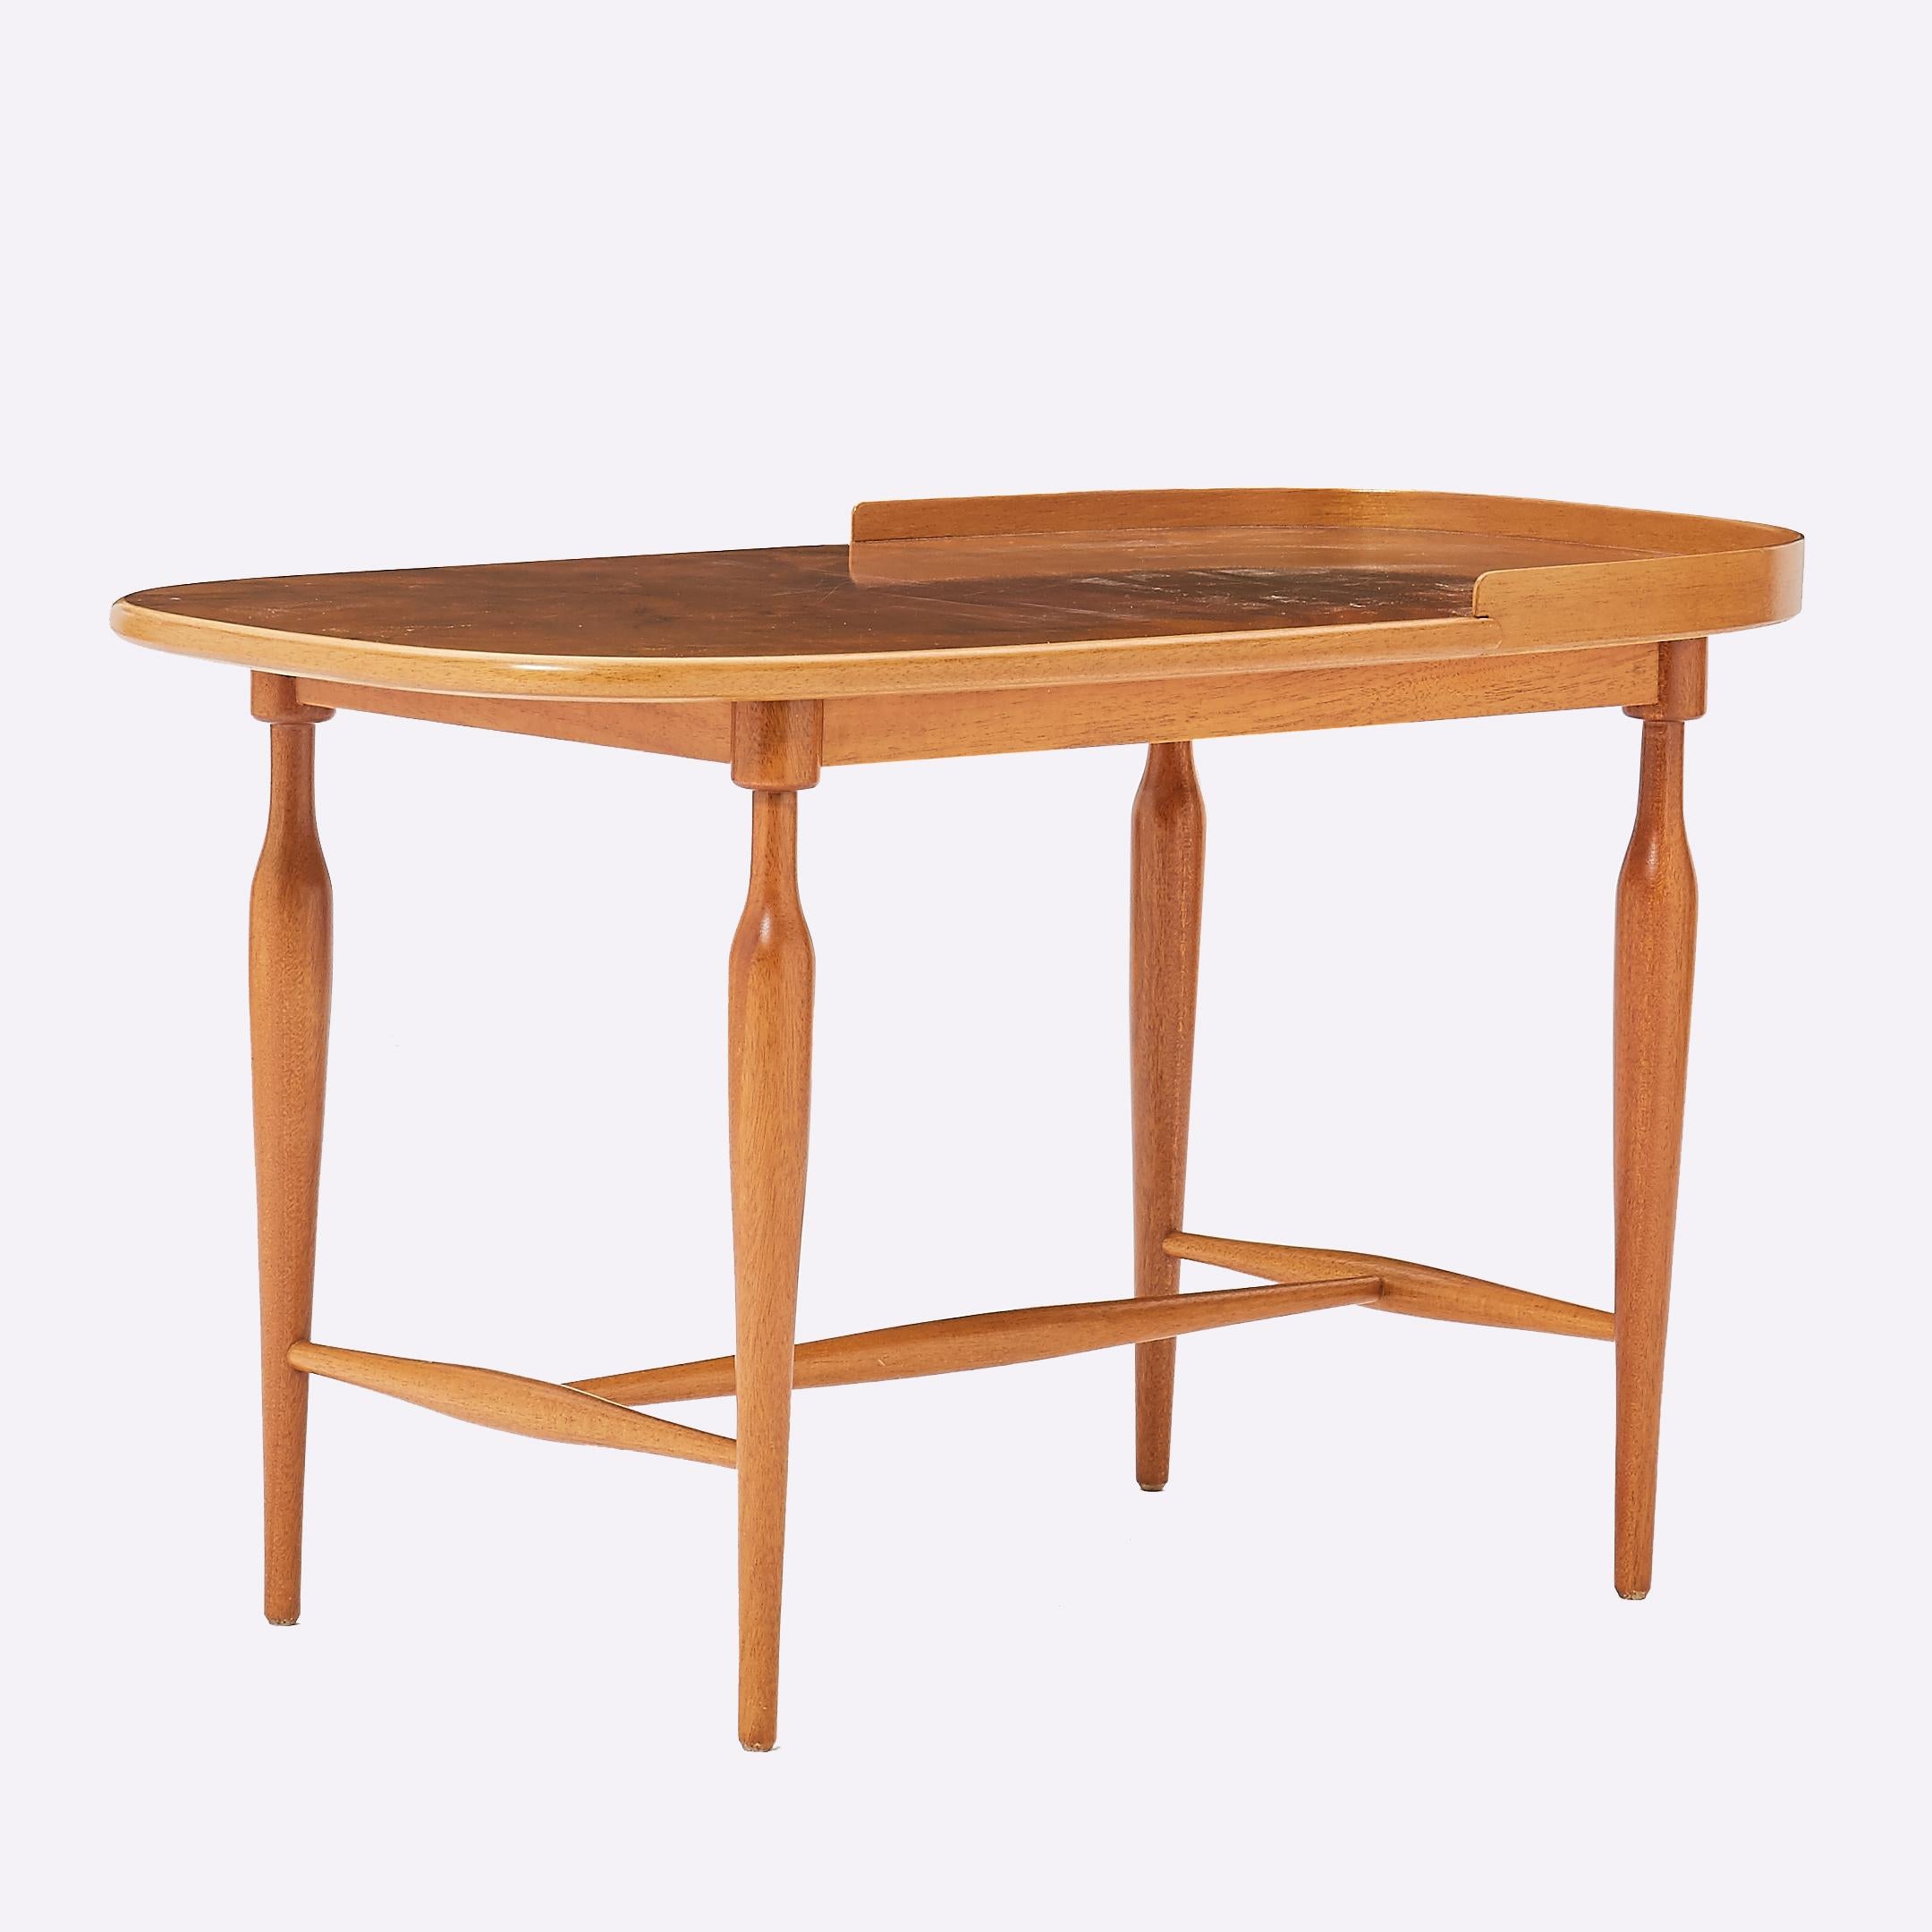 Side table/Occasional model 961 designed by Josef Frank for Svenskt Tenn, Sweden, 1950s. 

Mahogany.